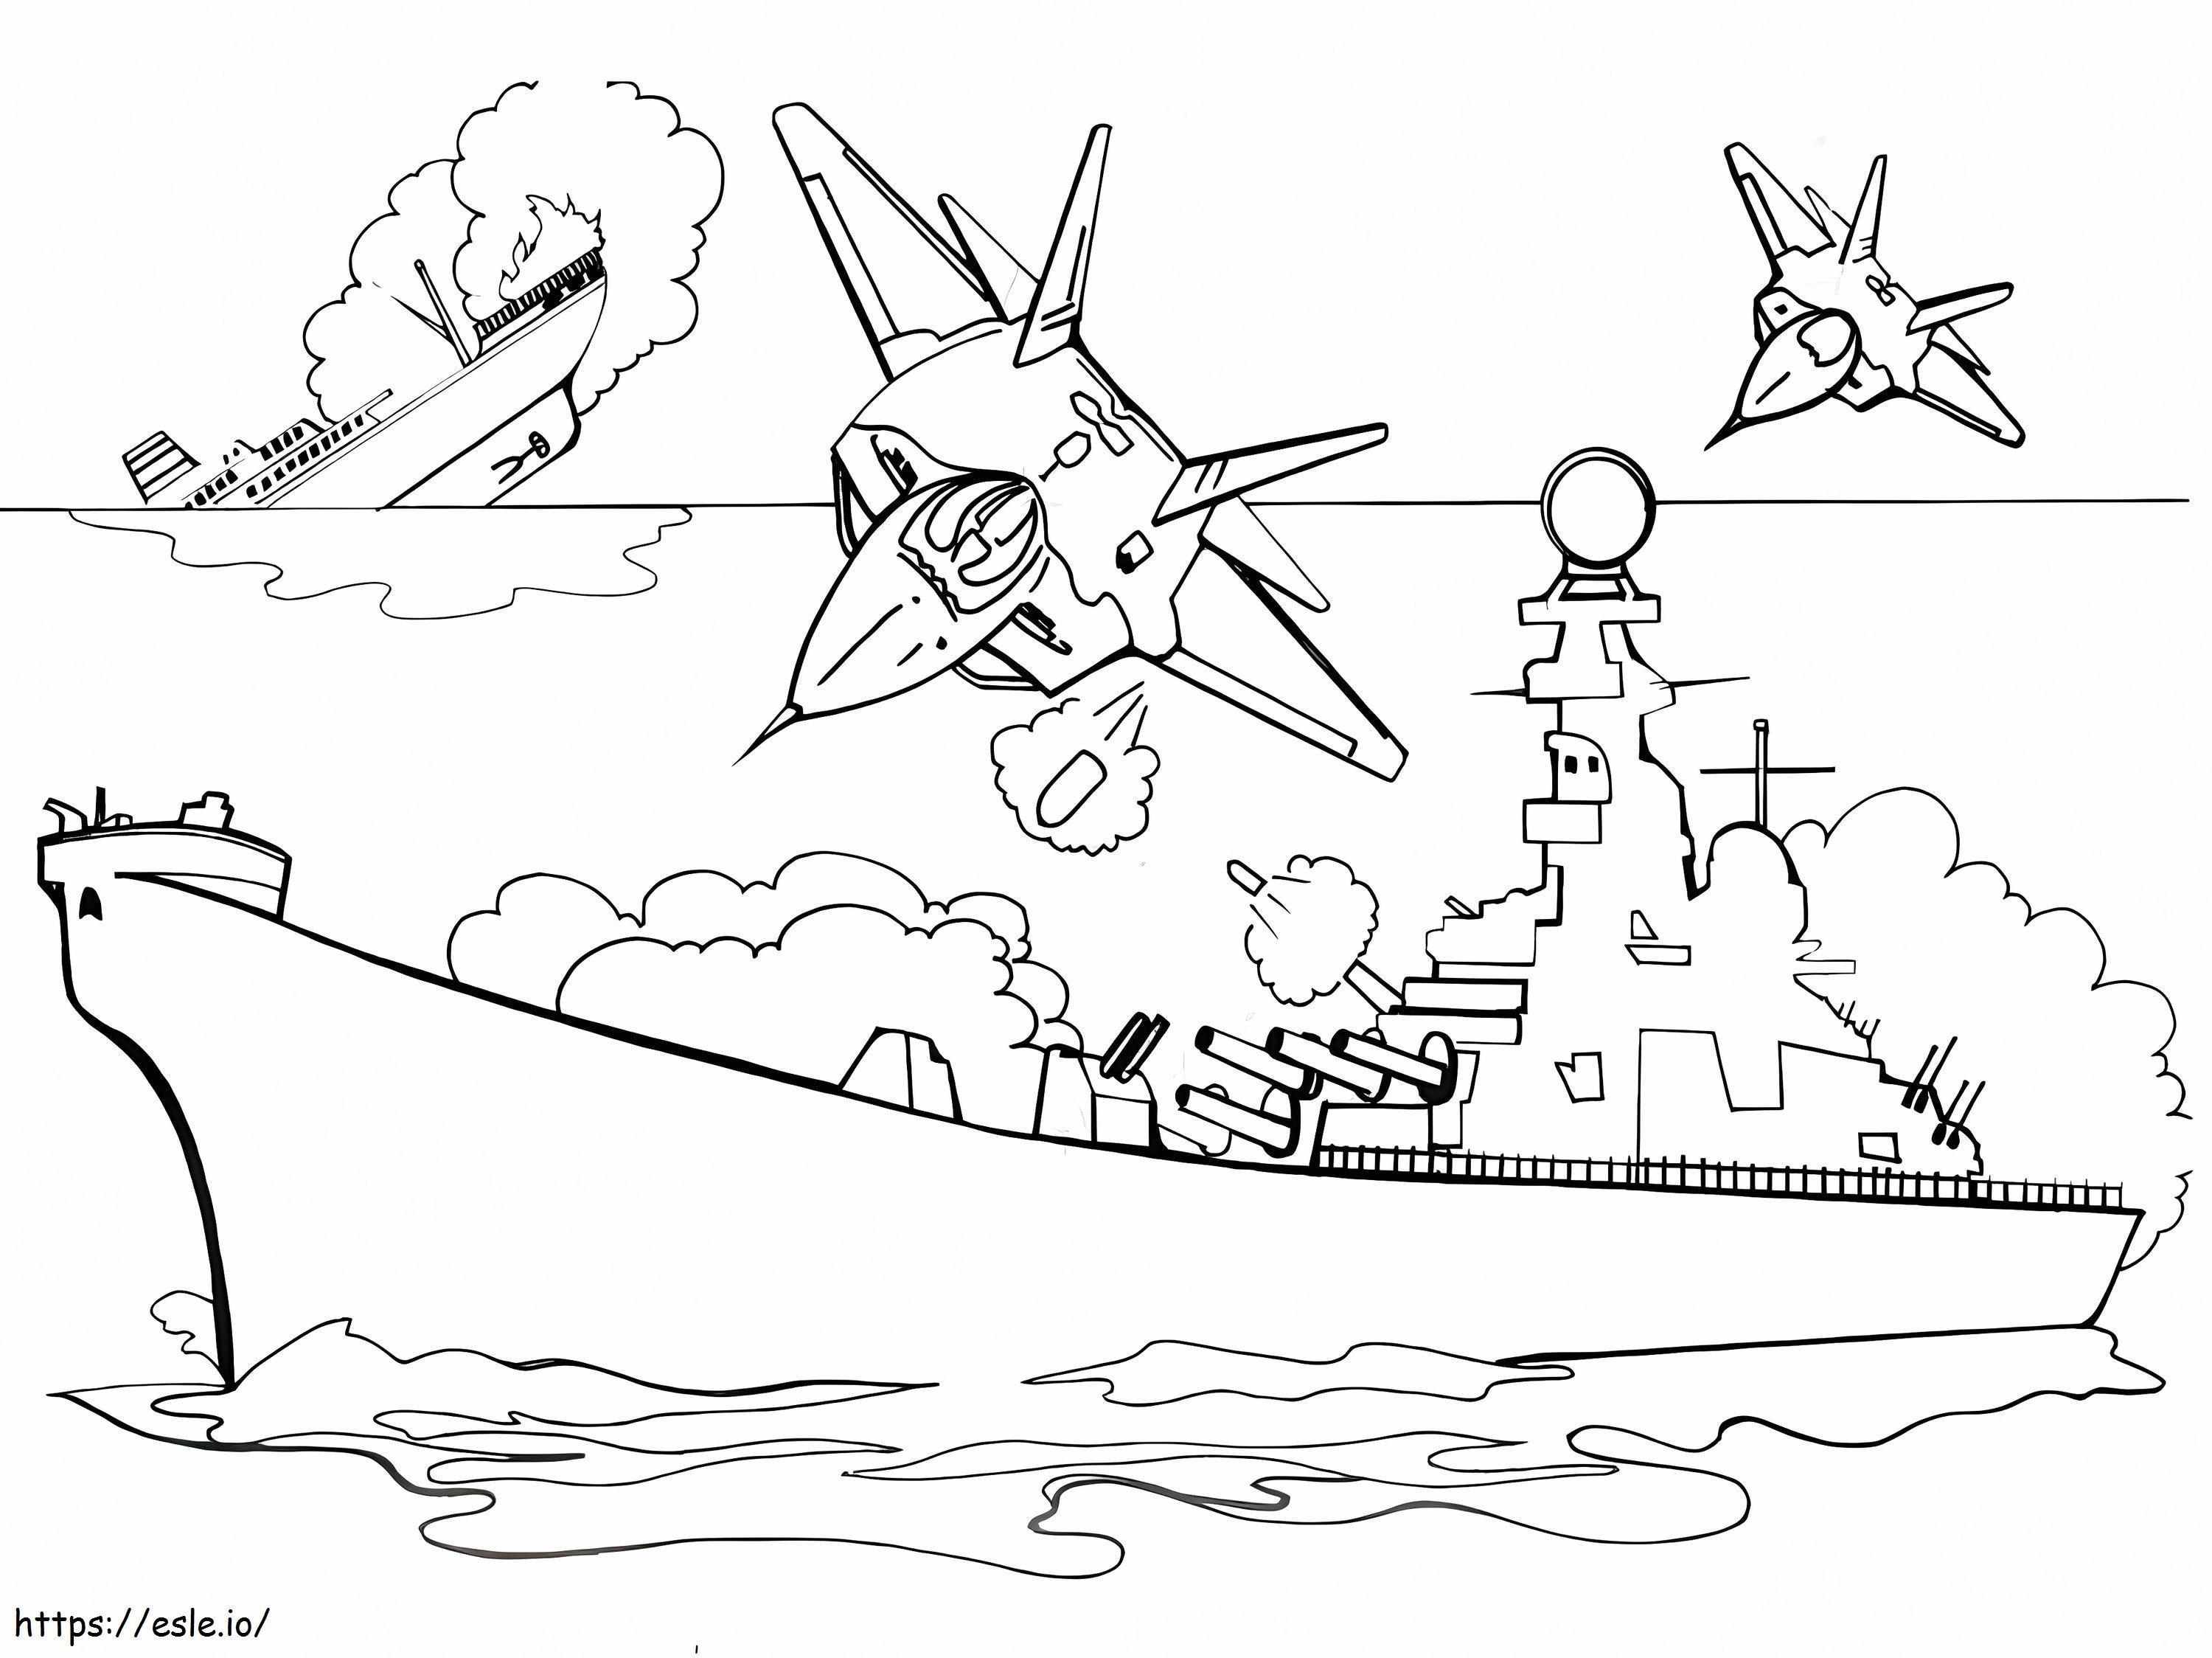 Aircrafts Attack coloring page